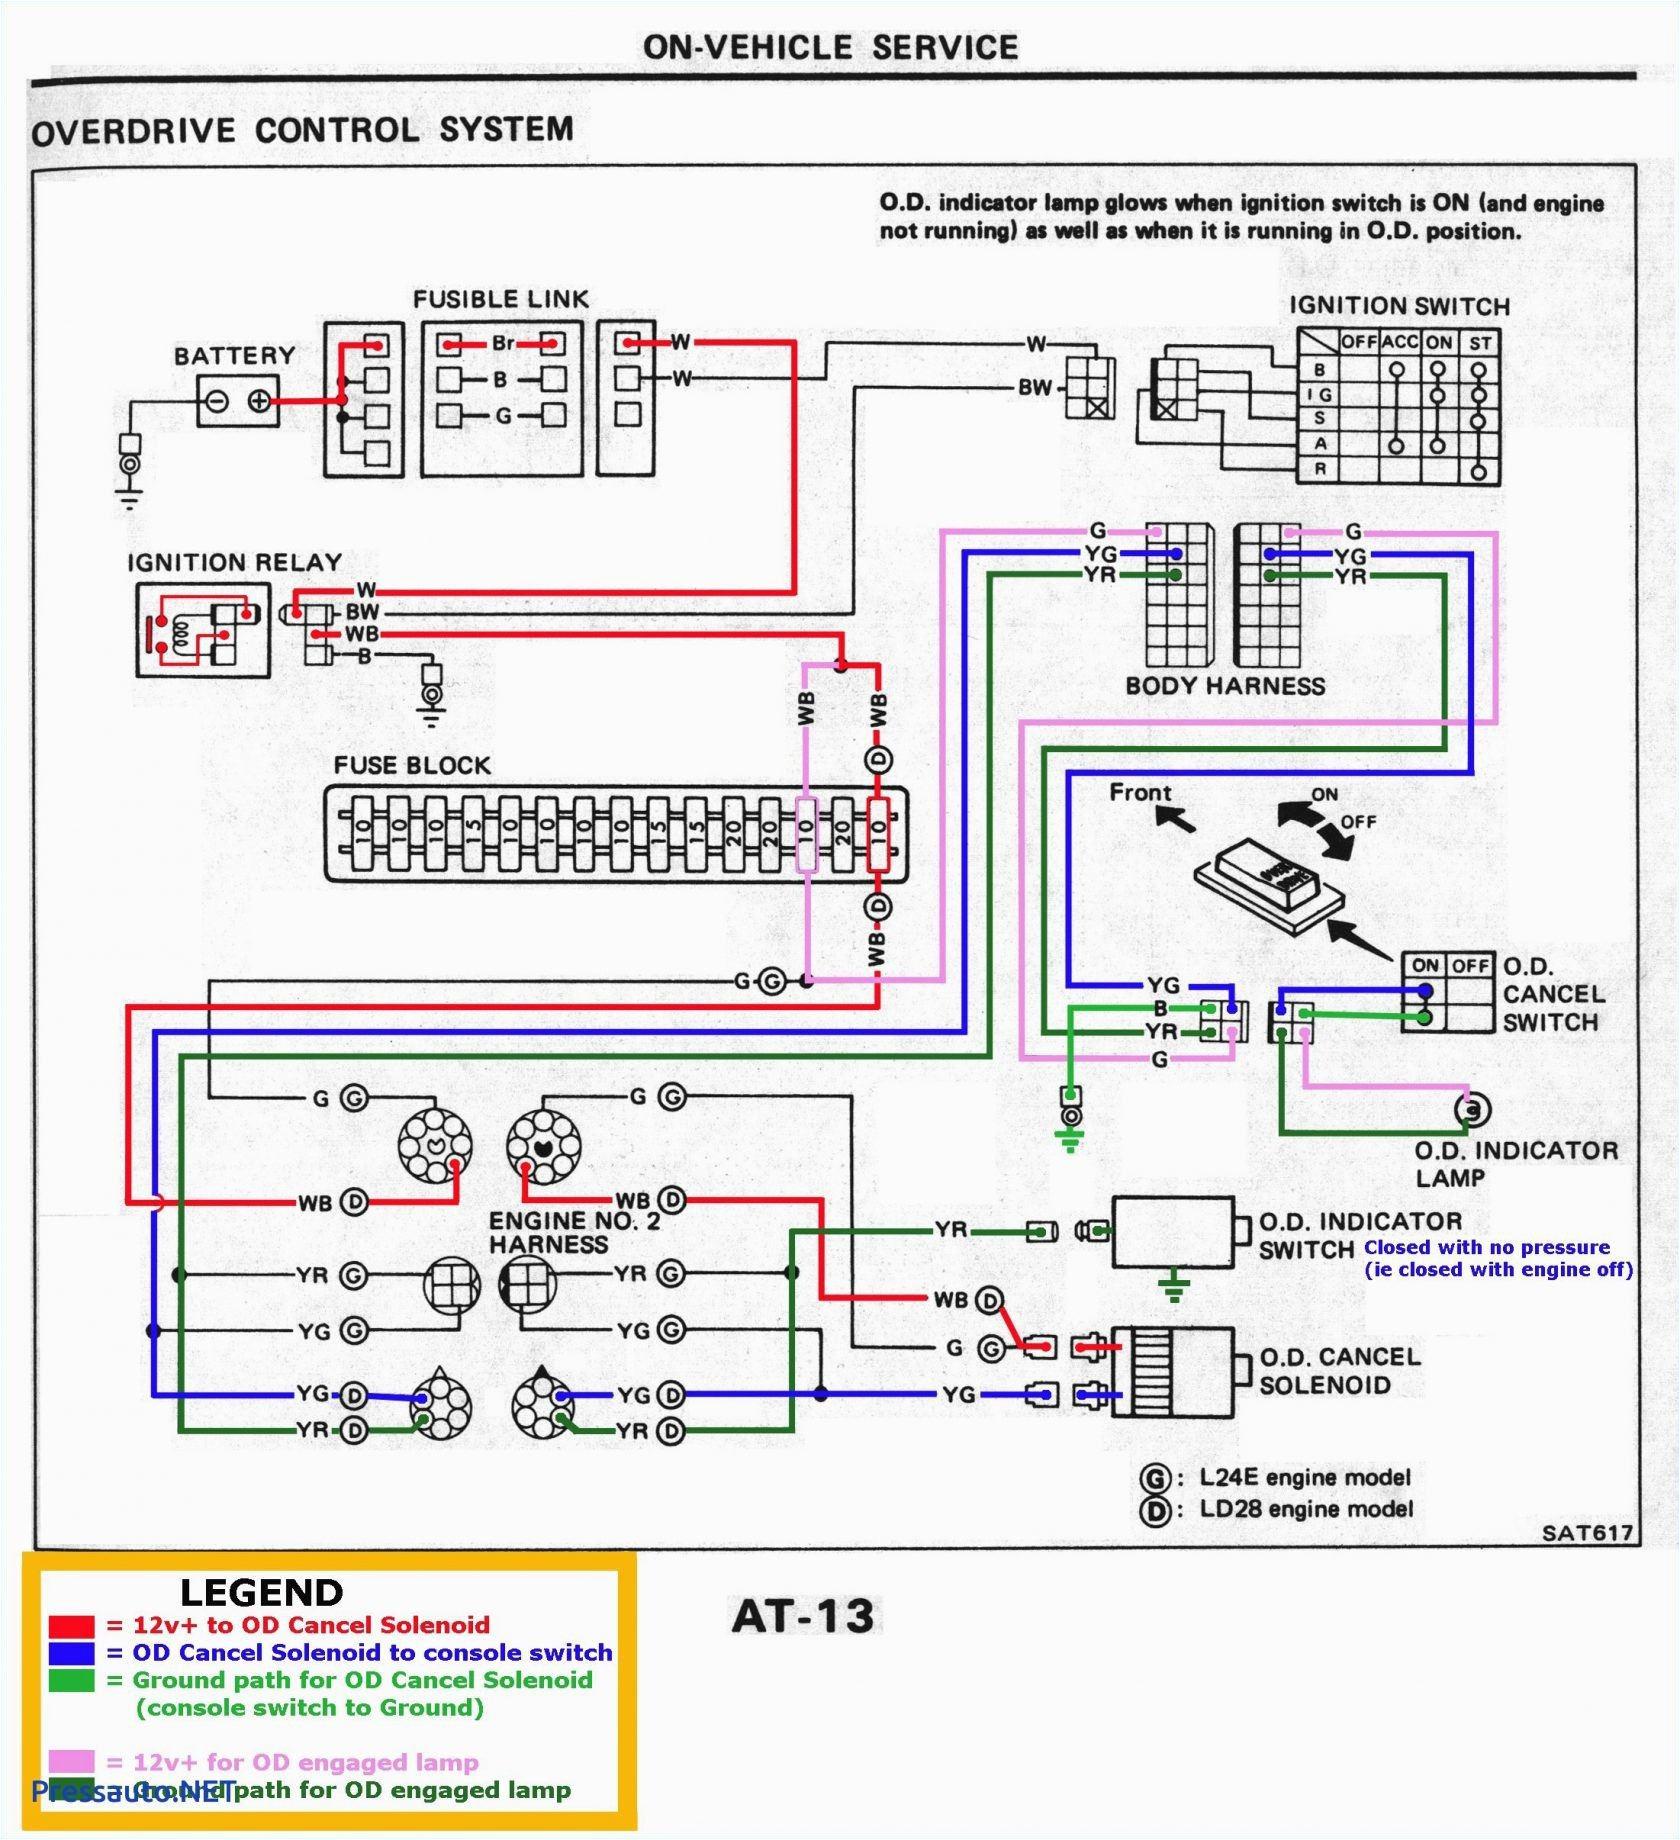 1998 chevy venture wiring diagrams wiring diagrams 1998 chevy venture wiring diagrams wiring diagrams konsult 1998